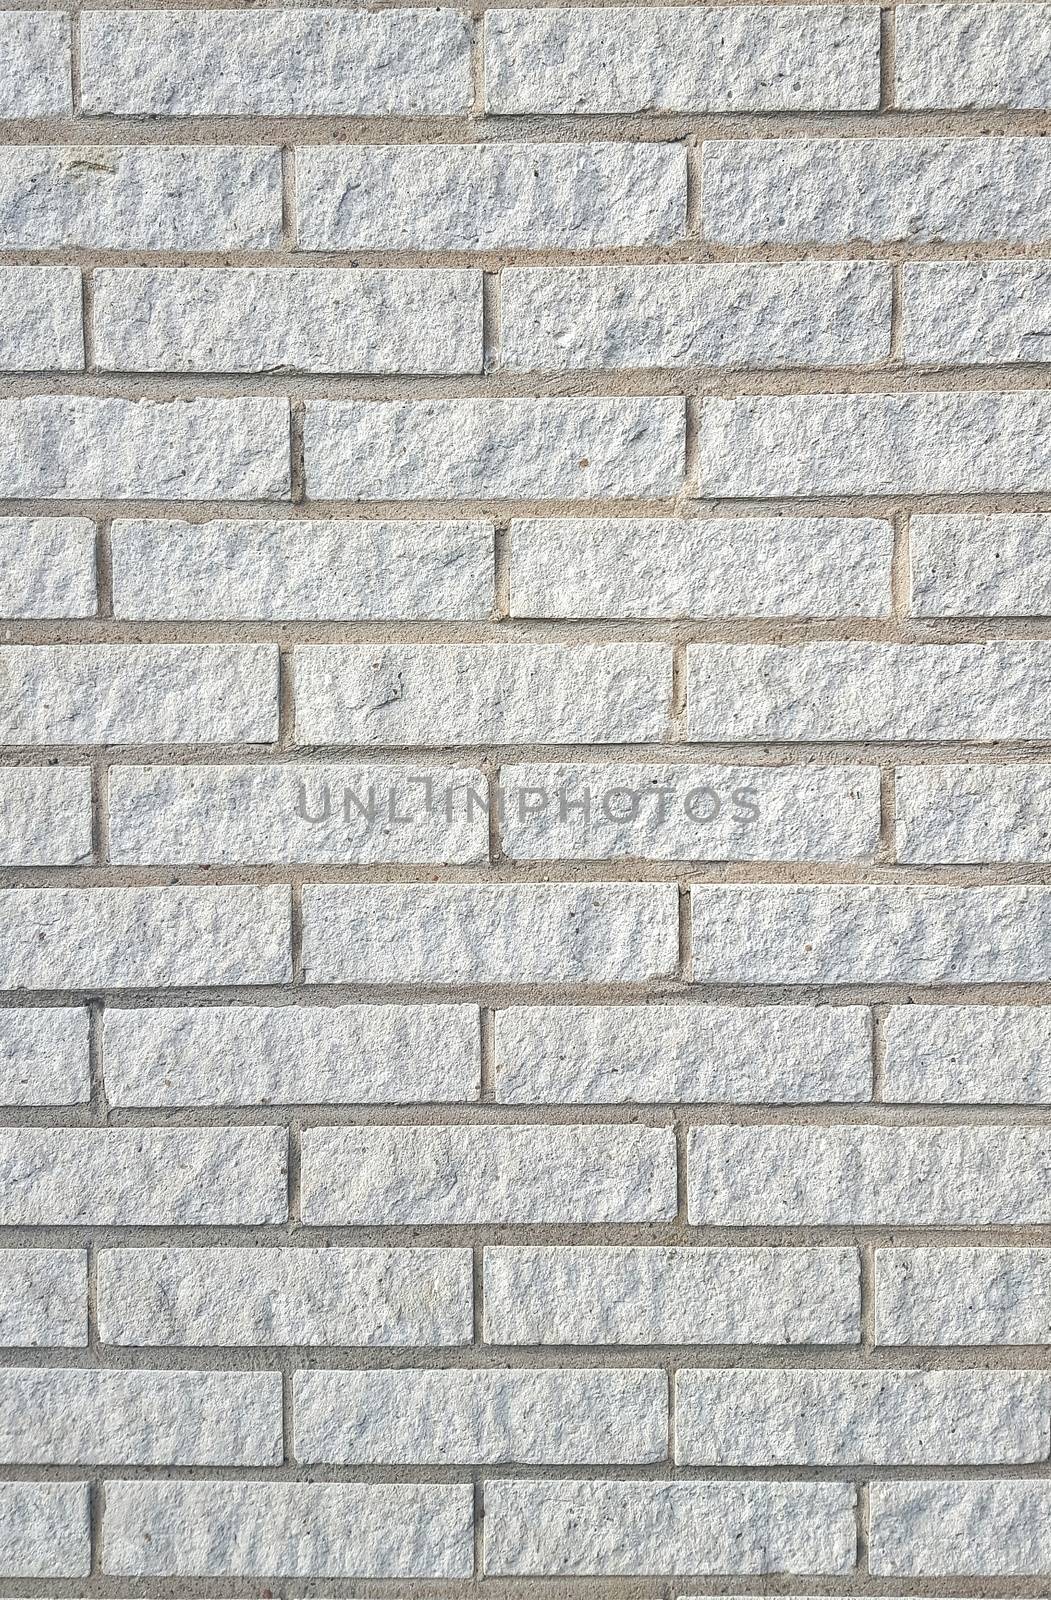 White brick background made up of beautiful solid white bricks